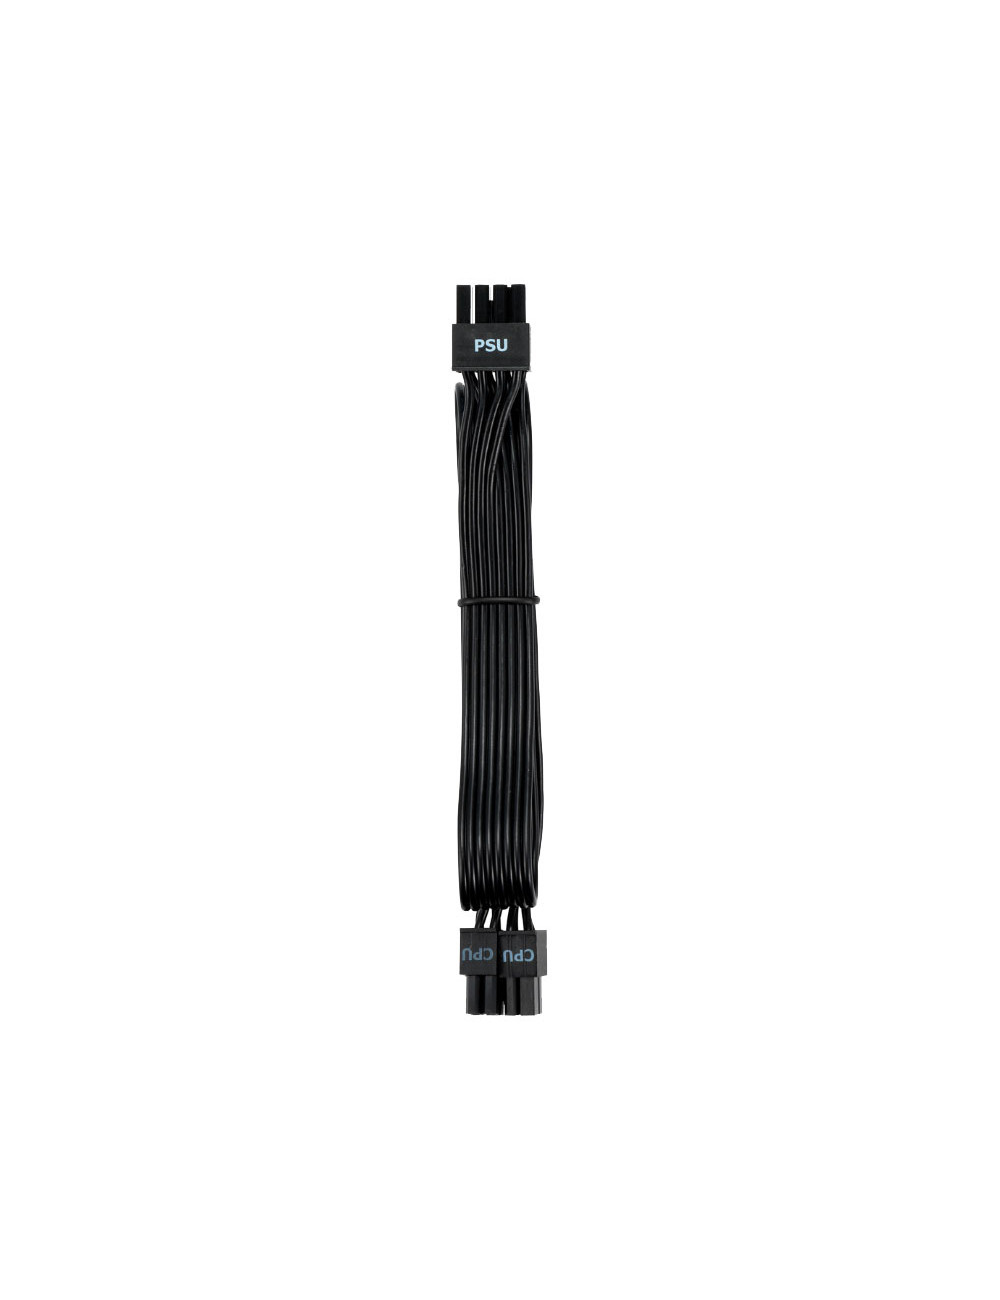 Fractal Design ATX12V 4+4 pin Modular cable FD-A-PSC1-001